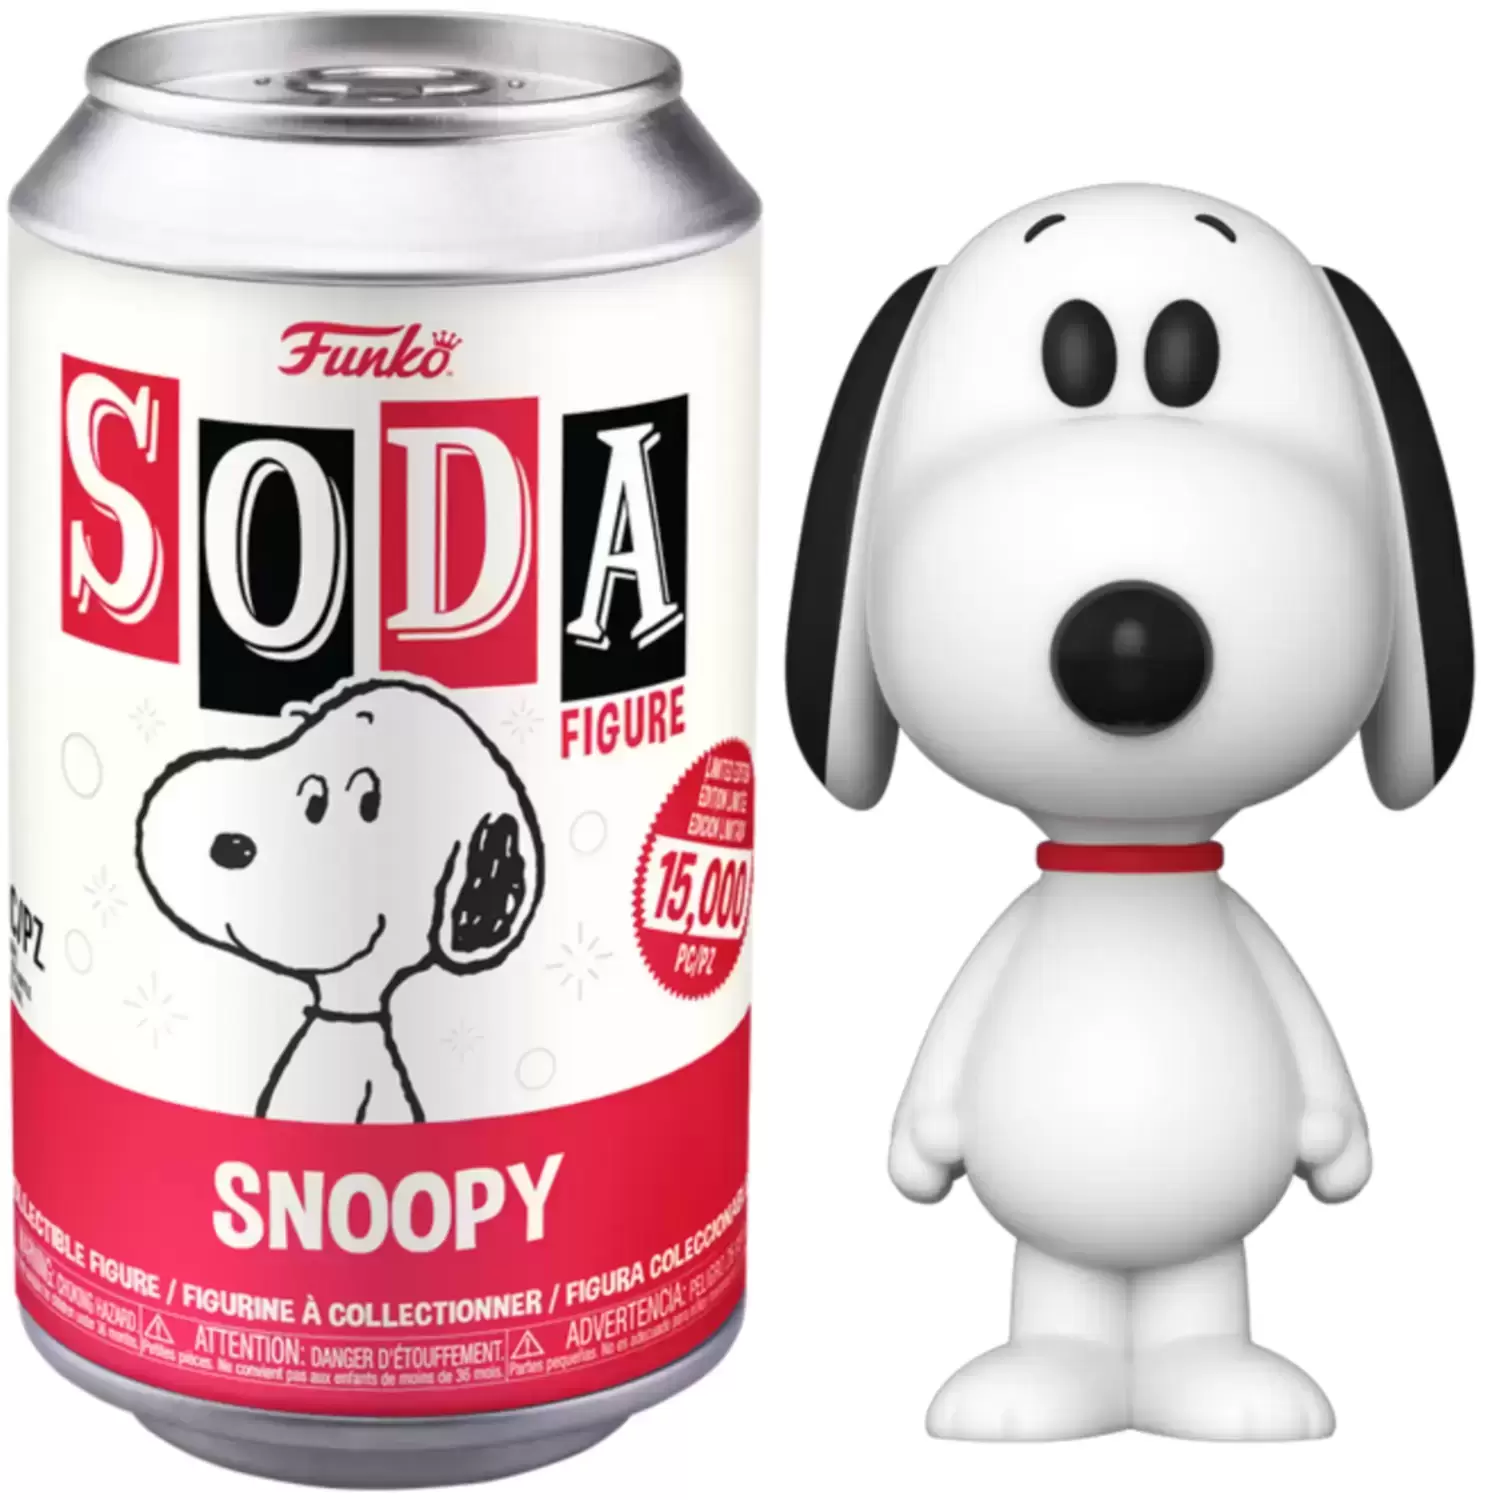 Vinyl Soda! - Peanuts - Snoopy